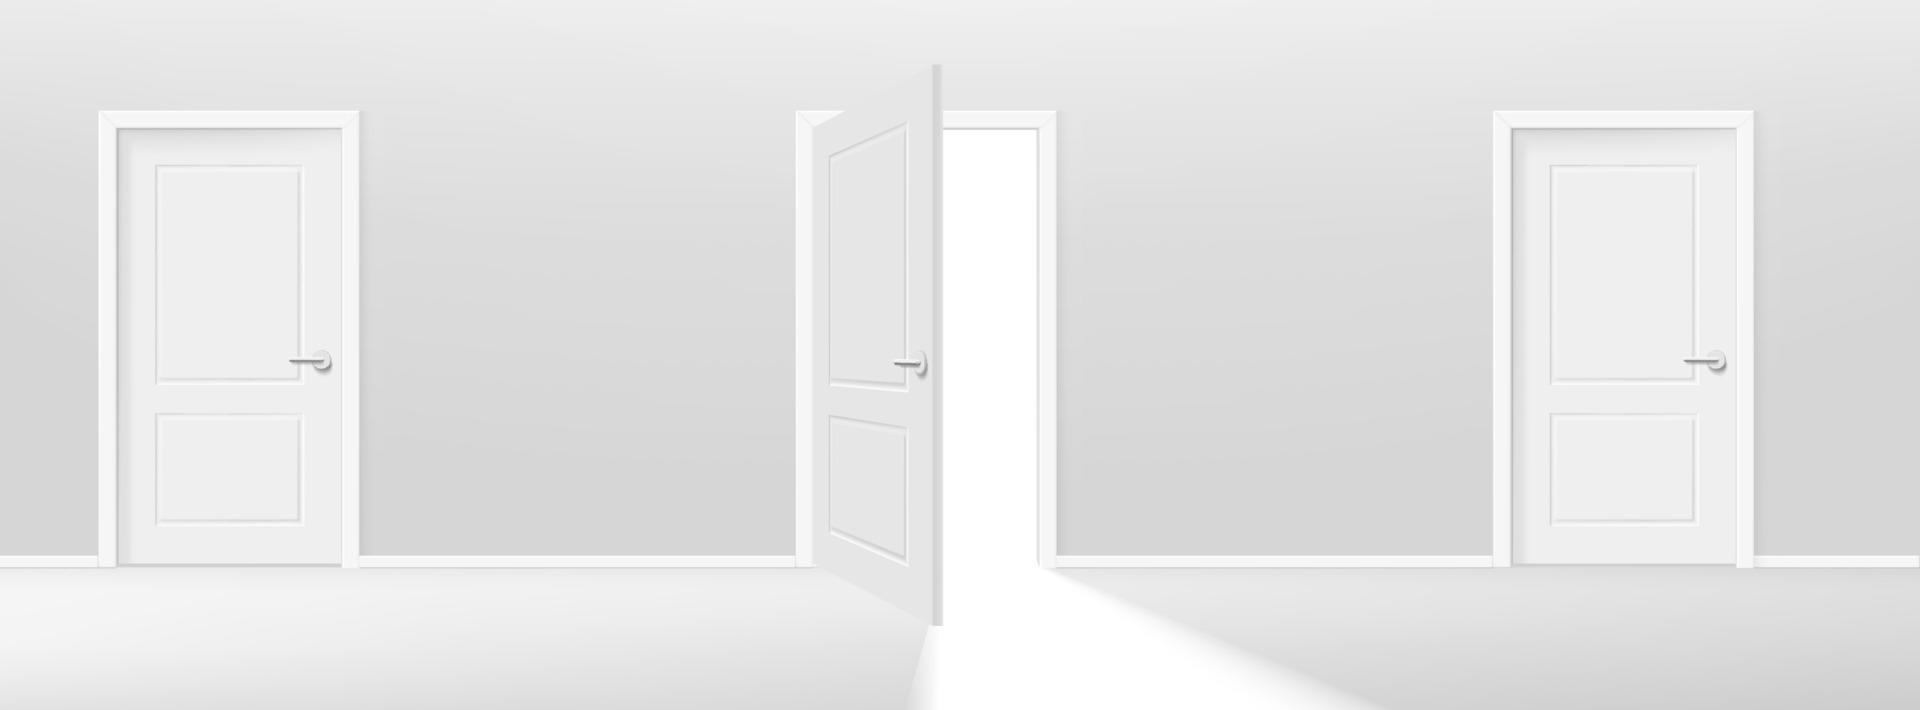 tre dörrar en av dem öppnas. realistisk 3d-stil vektorillustration vektor